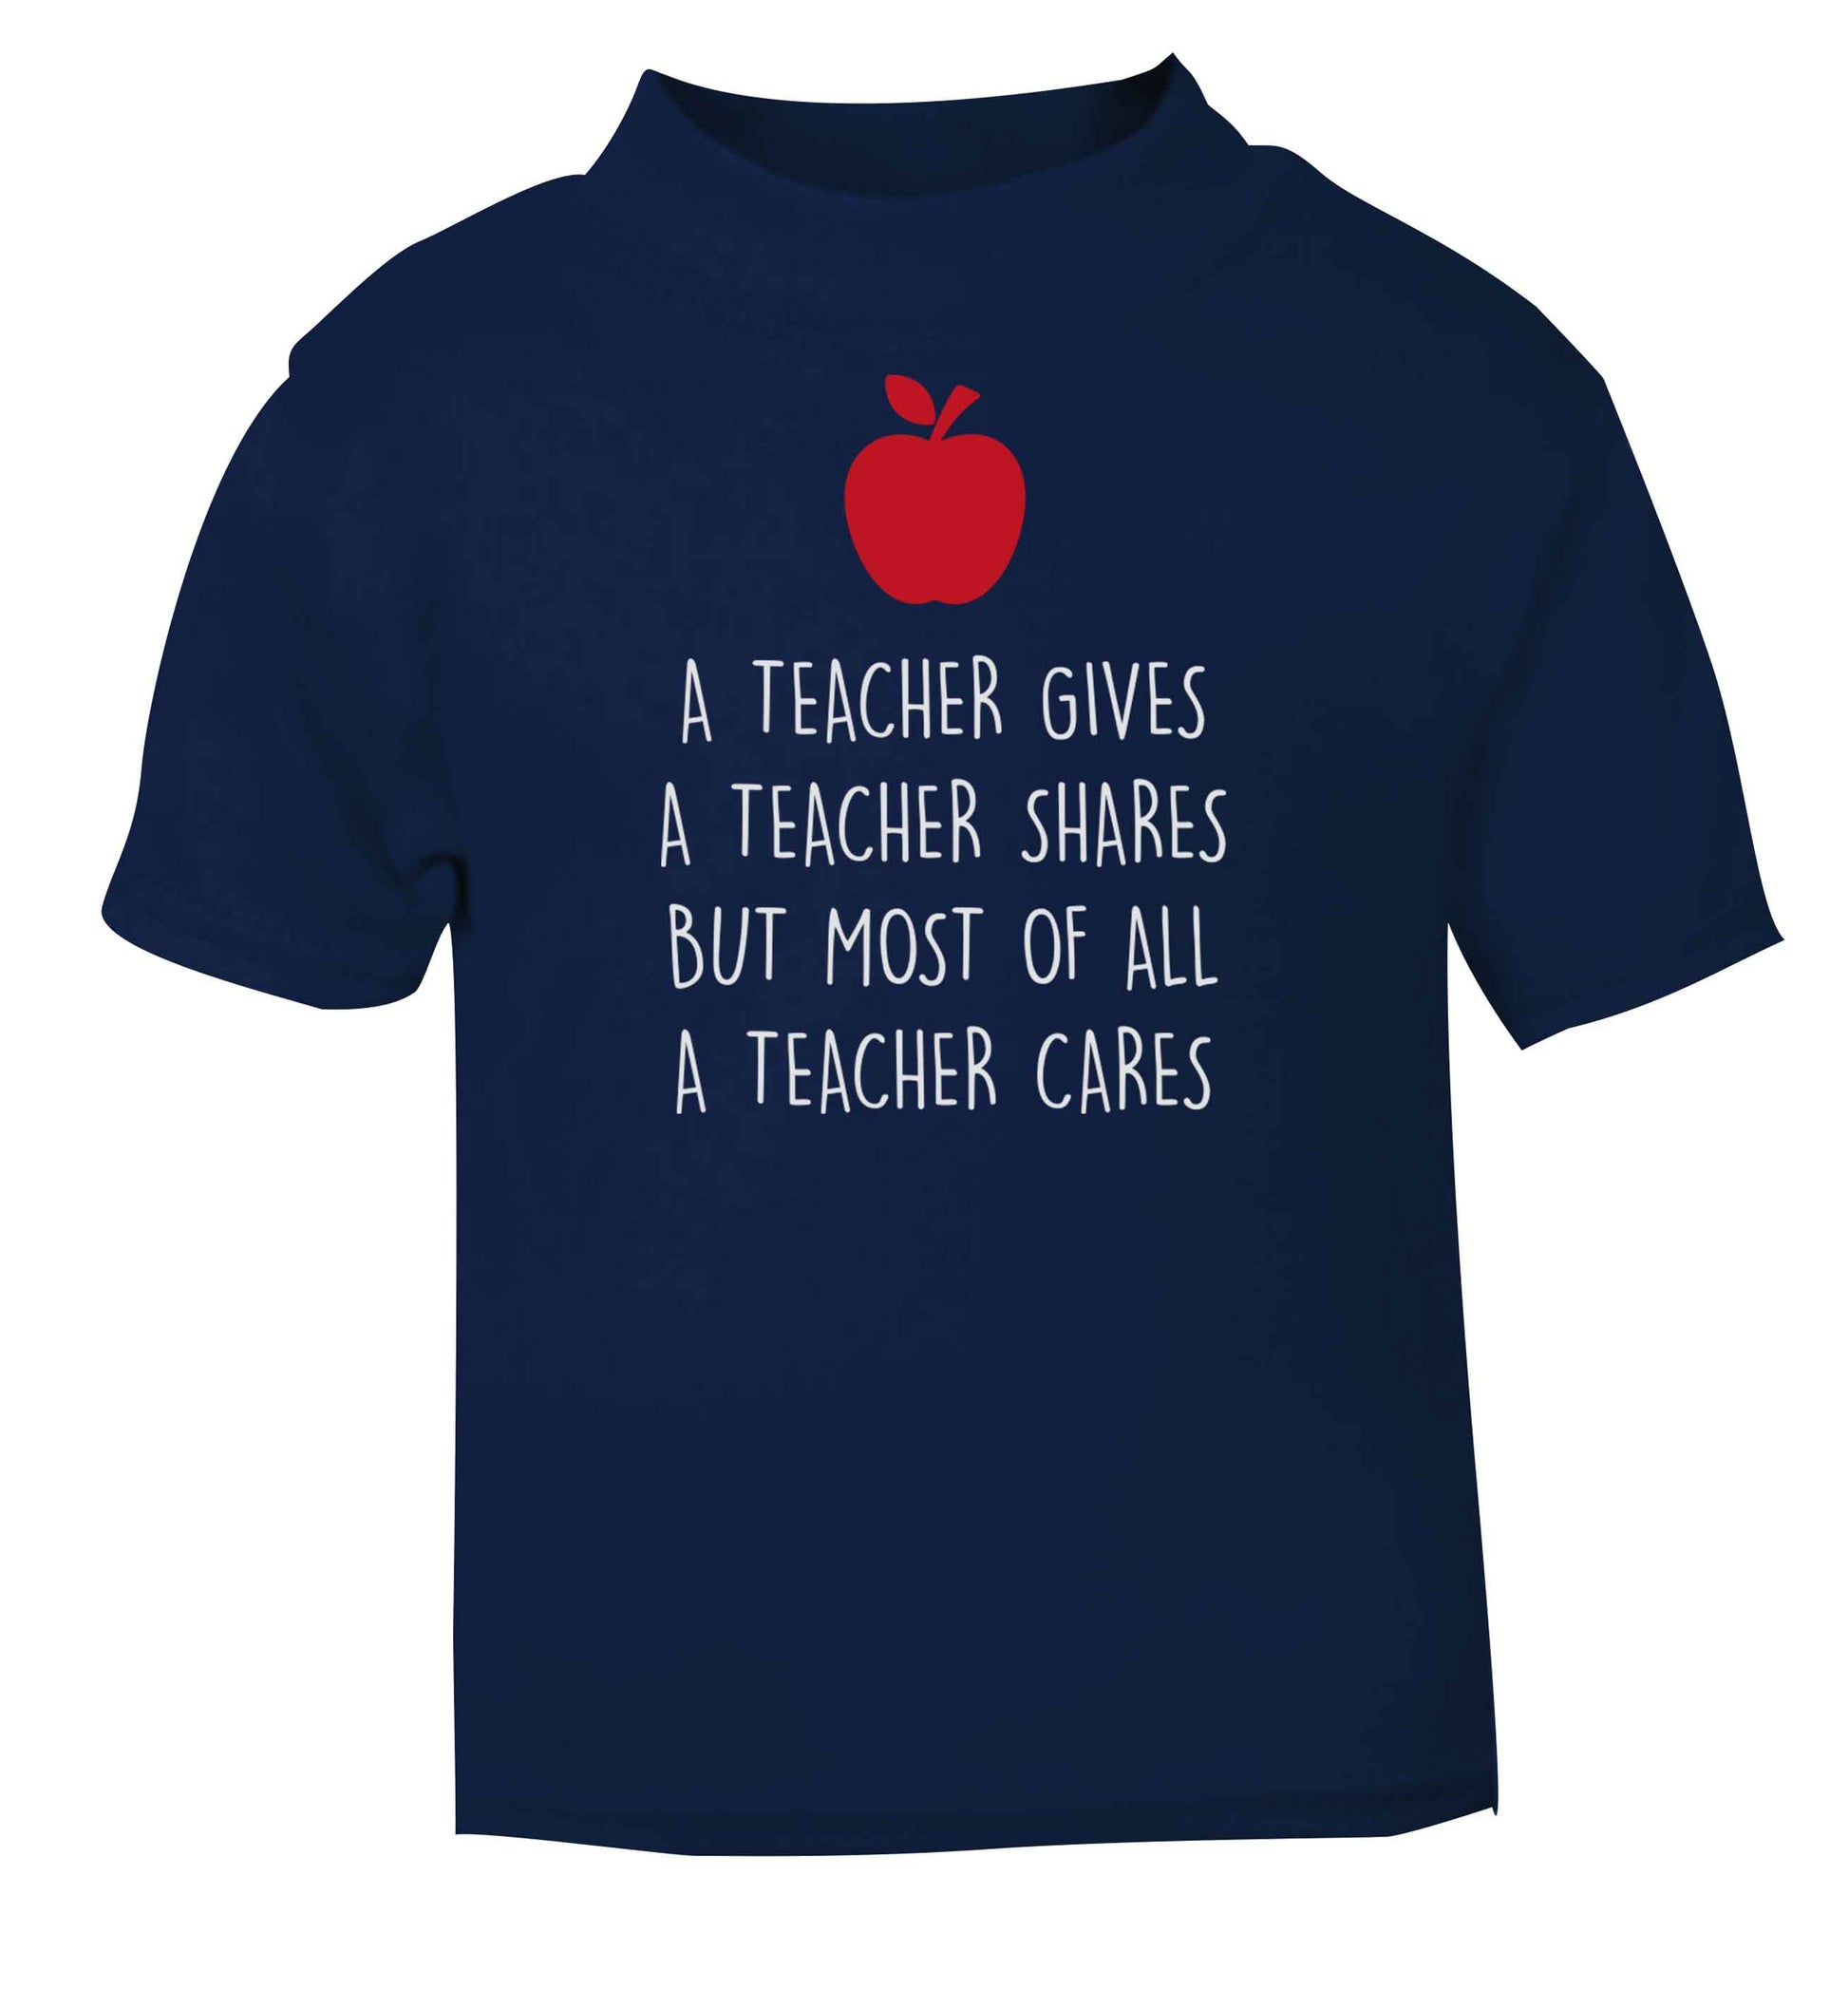 A teacher gives a teacher shares but most of all a teacher cares navy baby toddler Tshirt 2 Years